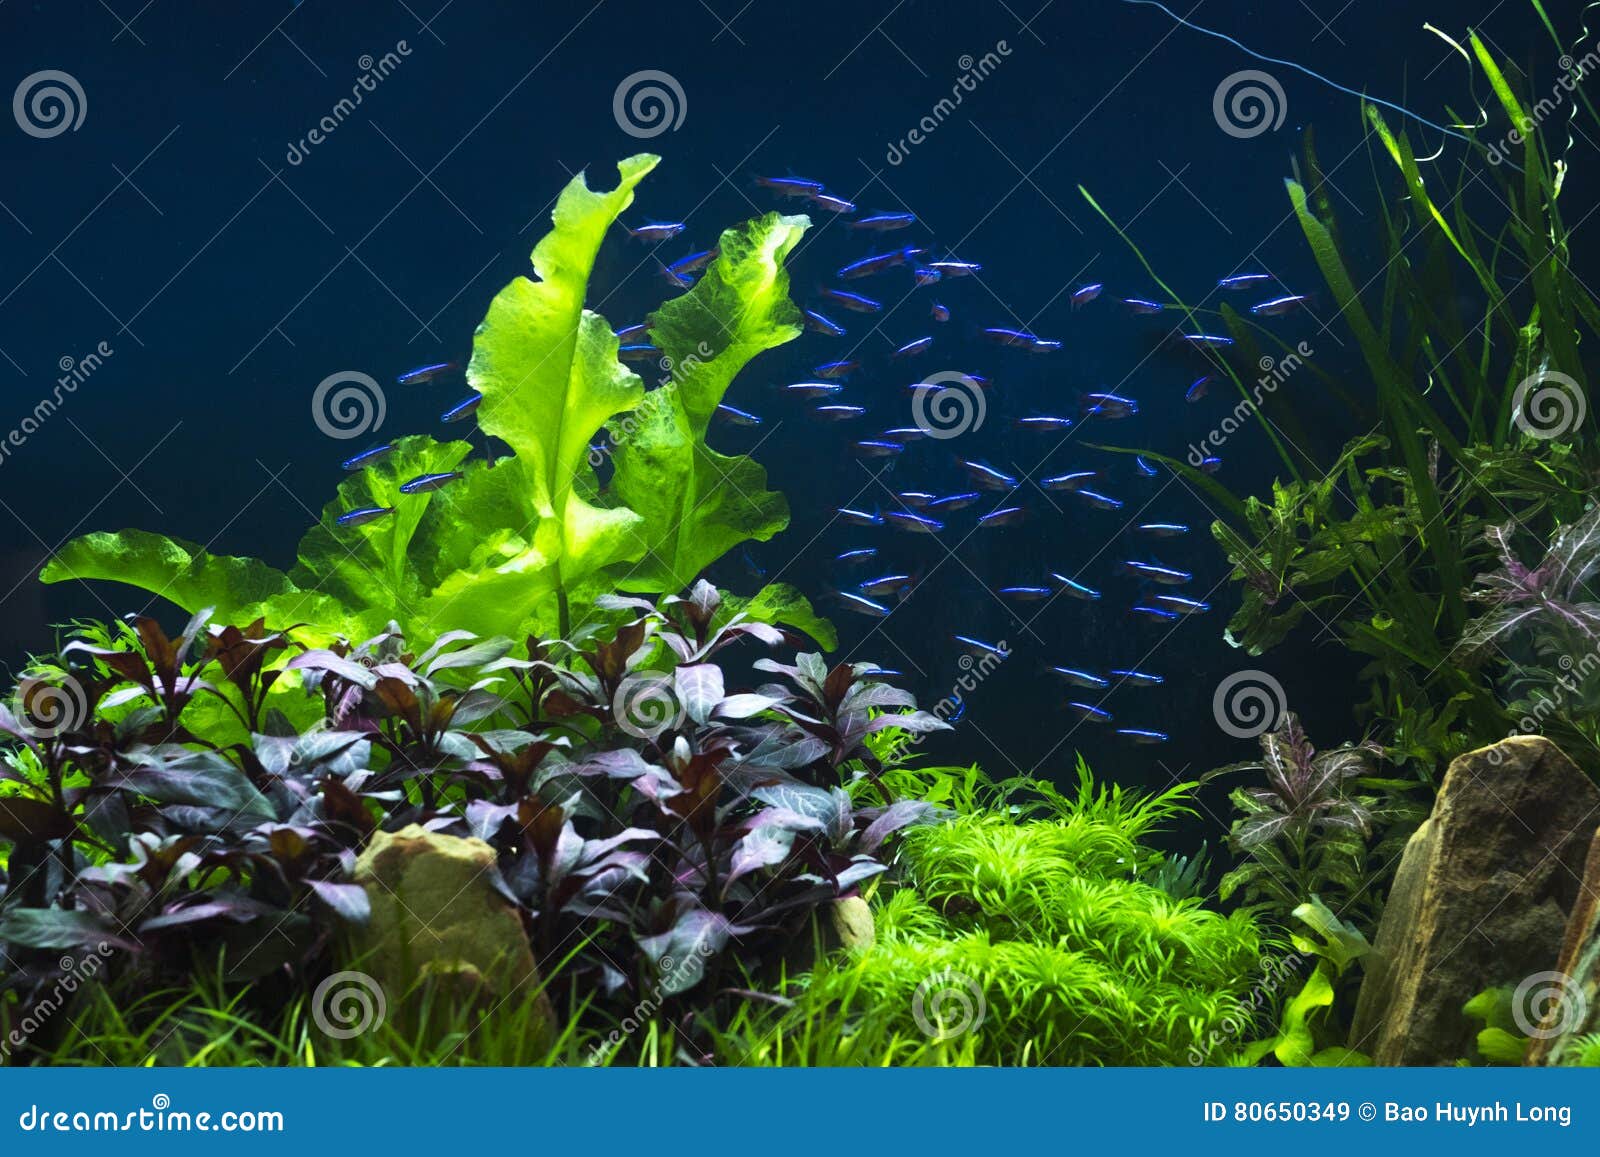 Small aquarium tank stock image. Image of natural, plants - 80650349